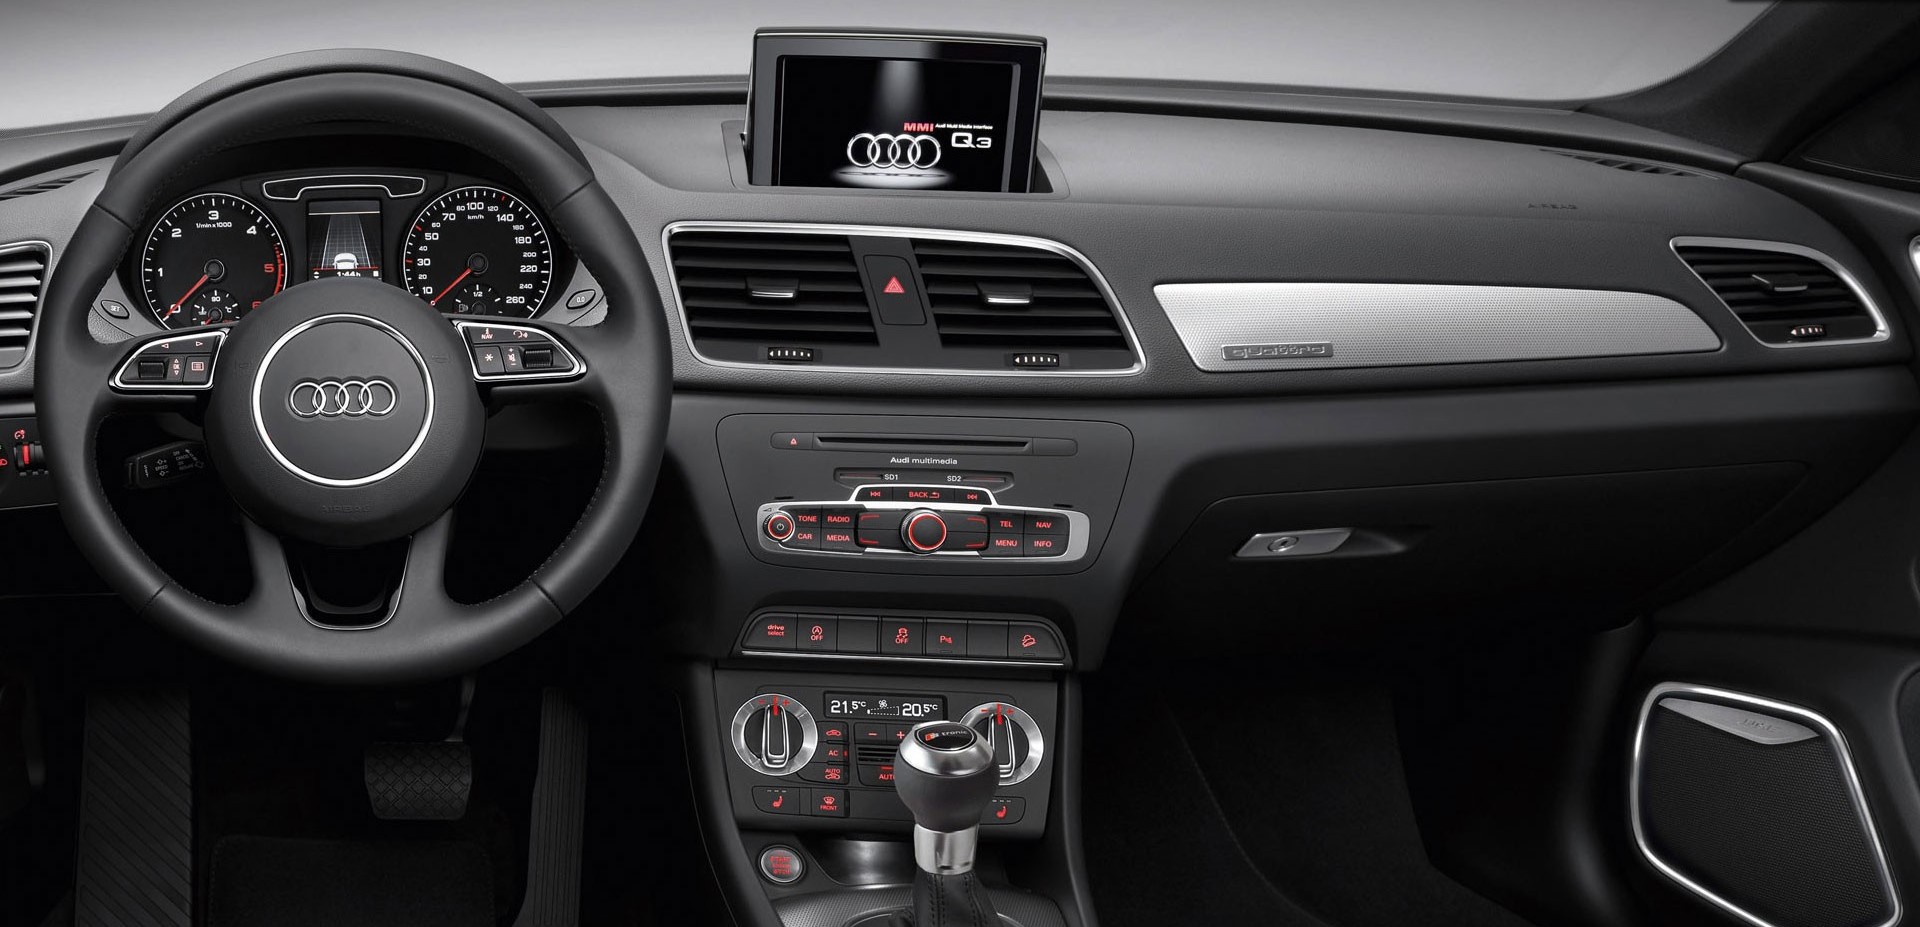 Audi Q3 1st Generation Interior Dashboard